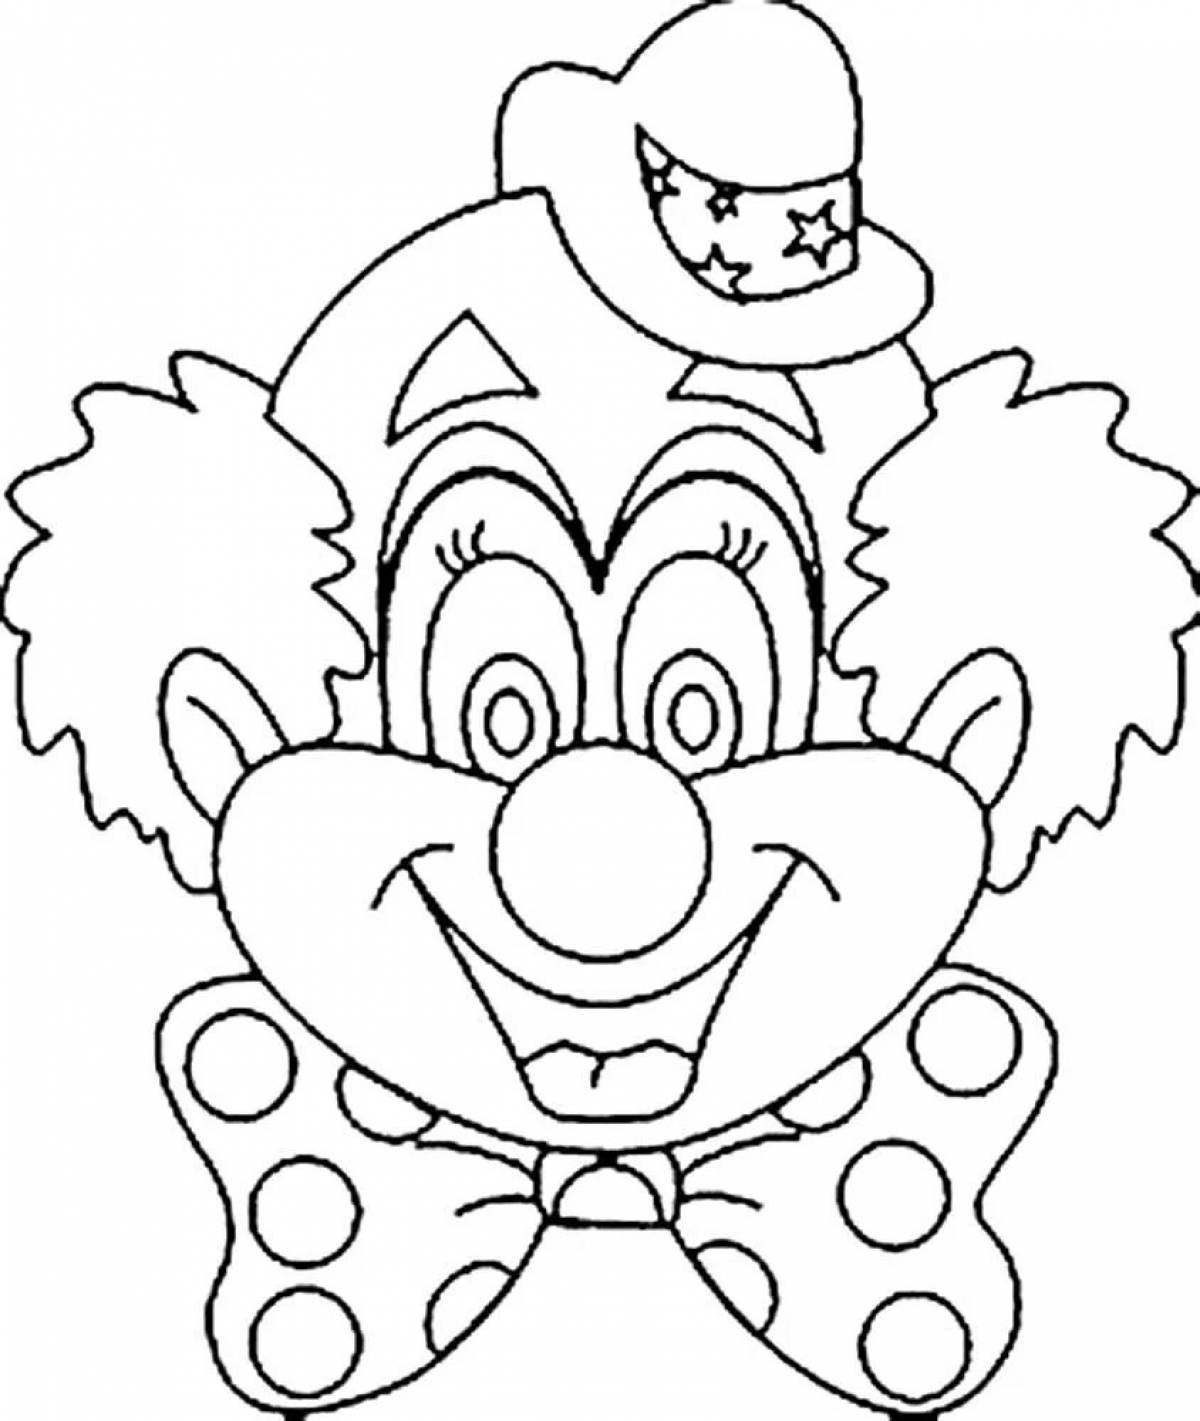 Шаблон маски клоуна распечатать. Клоун раскраска. Лицо клоуна раскраска. Клоун раскраска для детей. Маска клоун раскраска для детей.